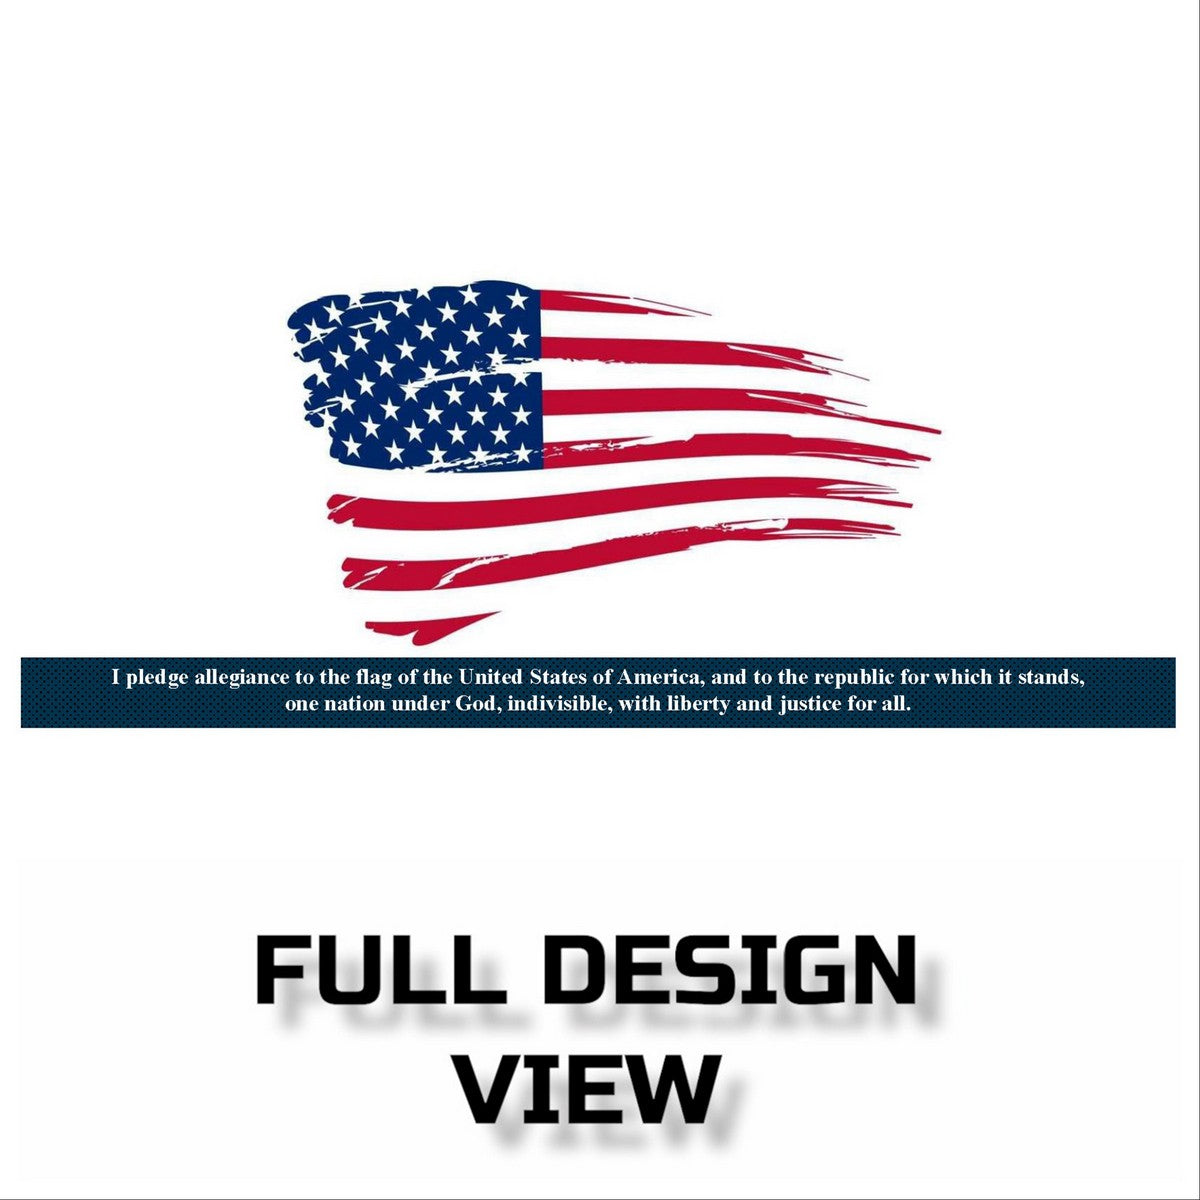 SUBLIMART: Patriotic Mug 'Mount Rushmore' (Design 43) - Artistica.com